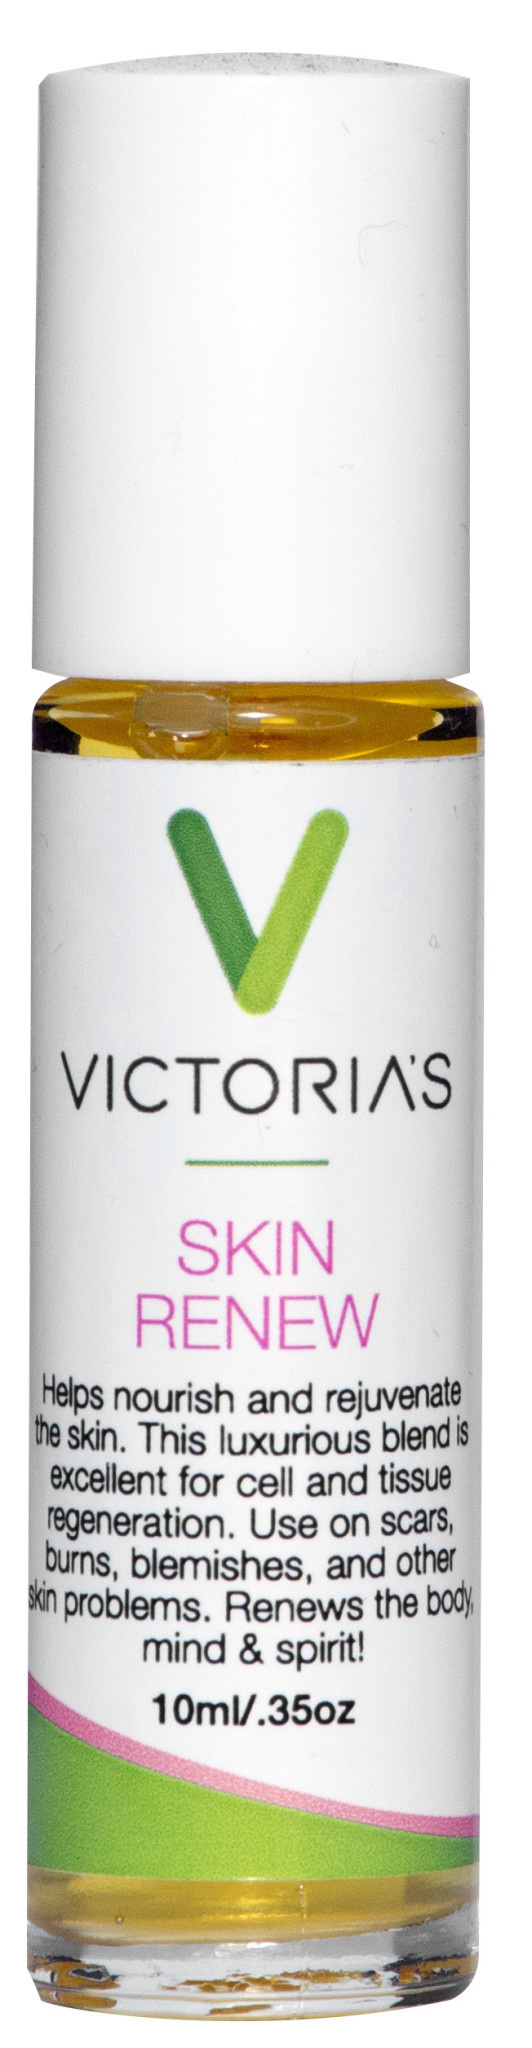 Victoria's - Aromatherapy Blend Roll-on - Skin Renew - 10ml